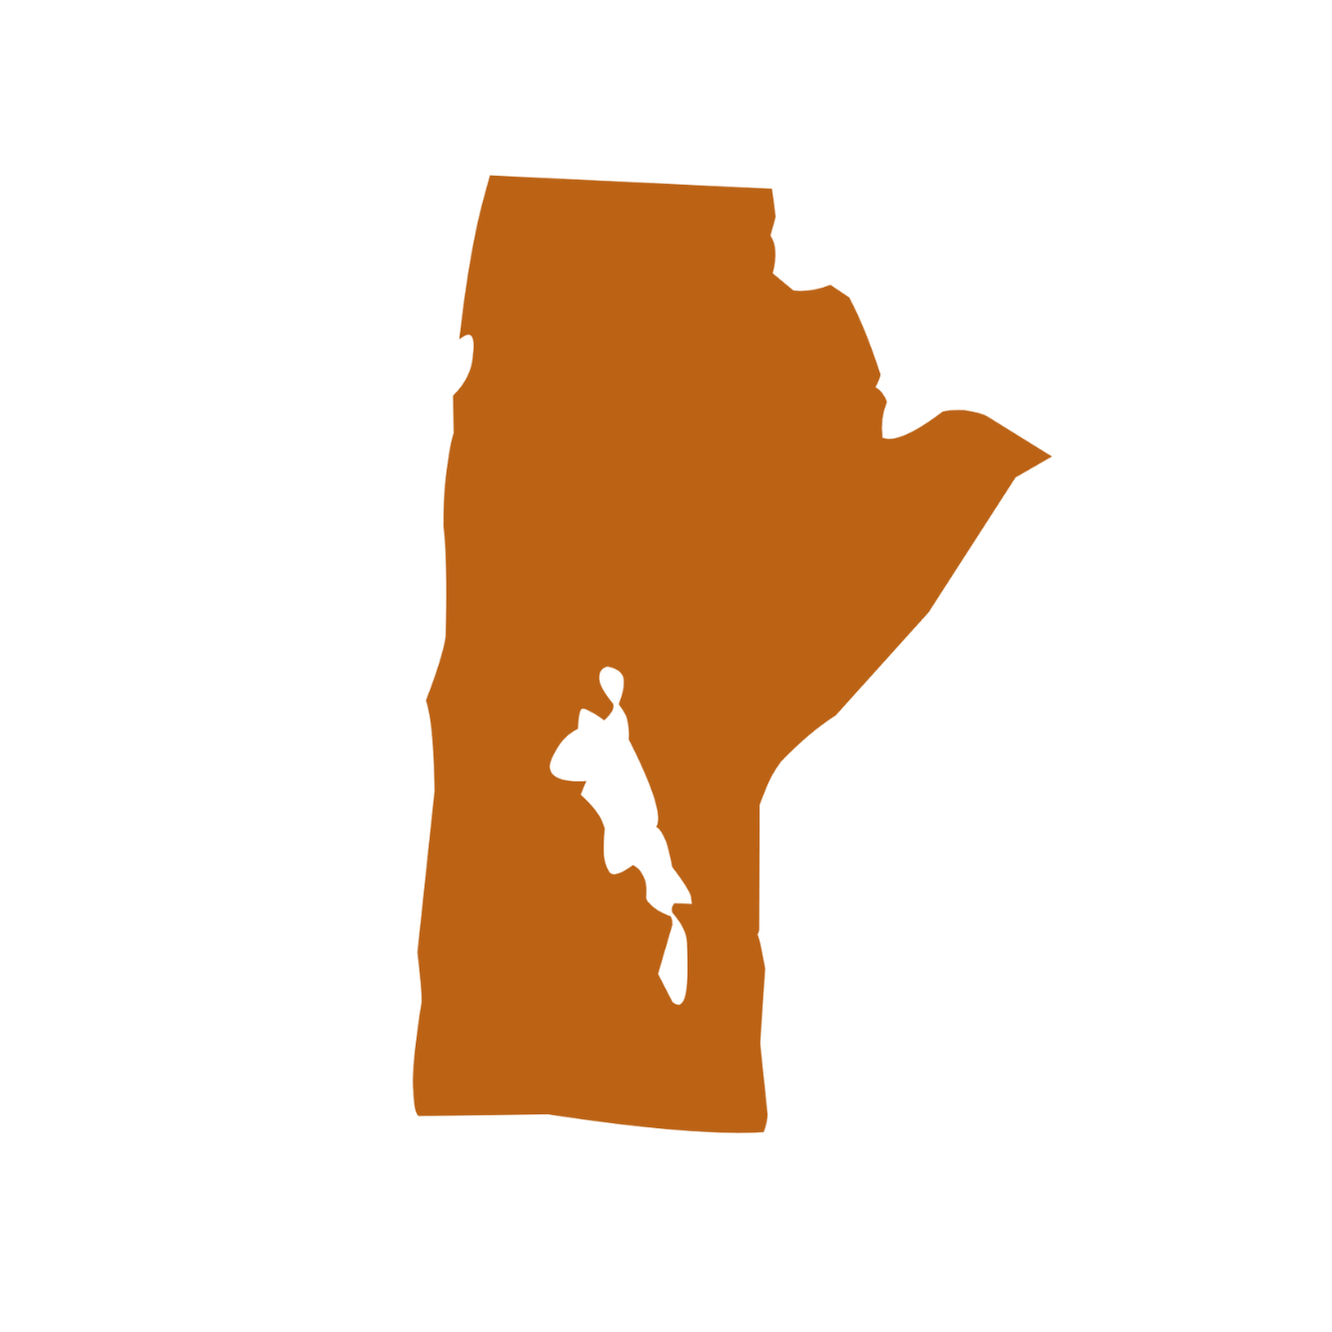 A map of Manitoba.